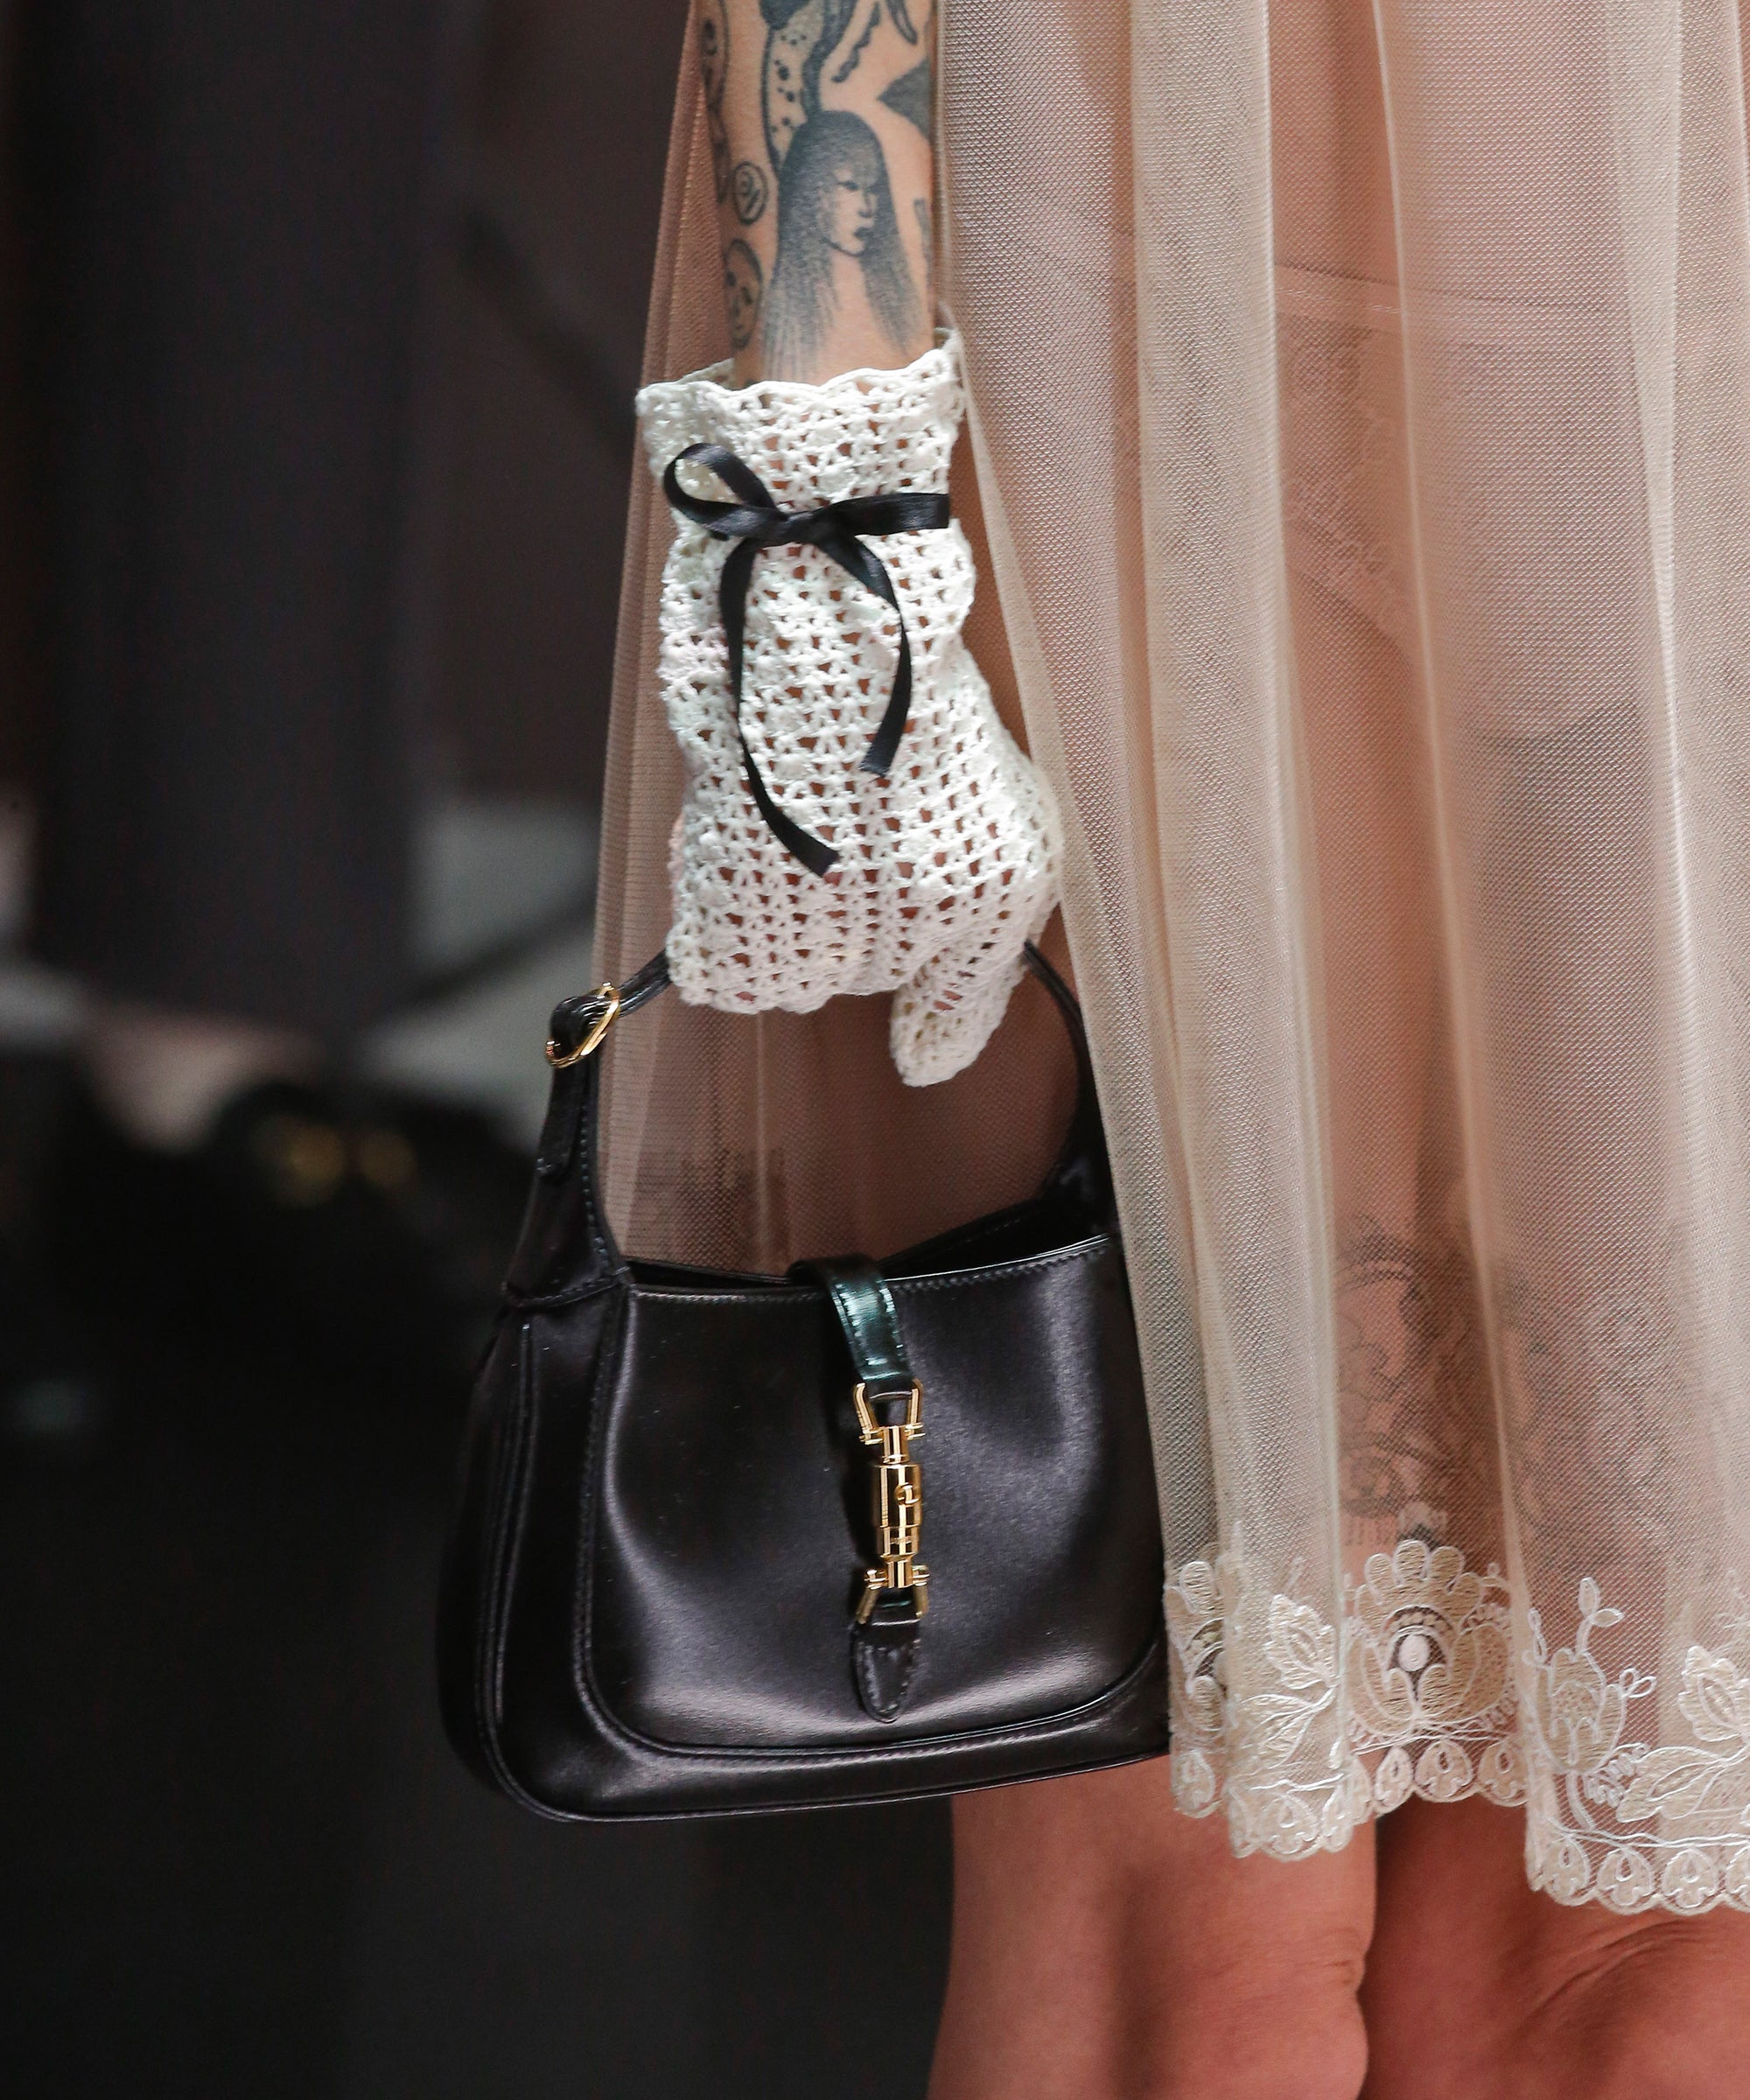 Buy Fashionable Gucci Handbag For Stylish Girls (LAK054)